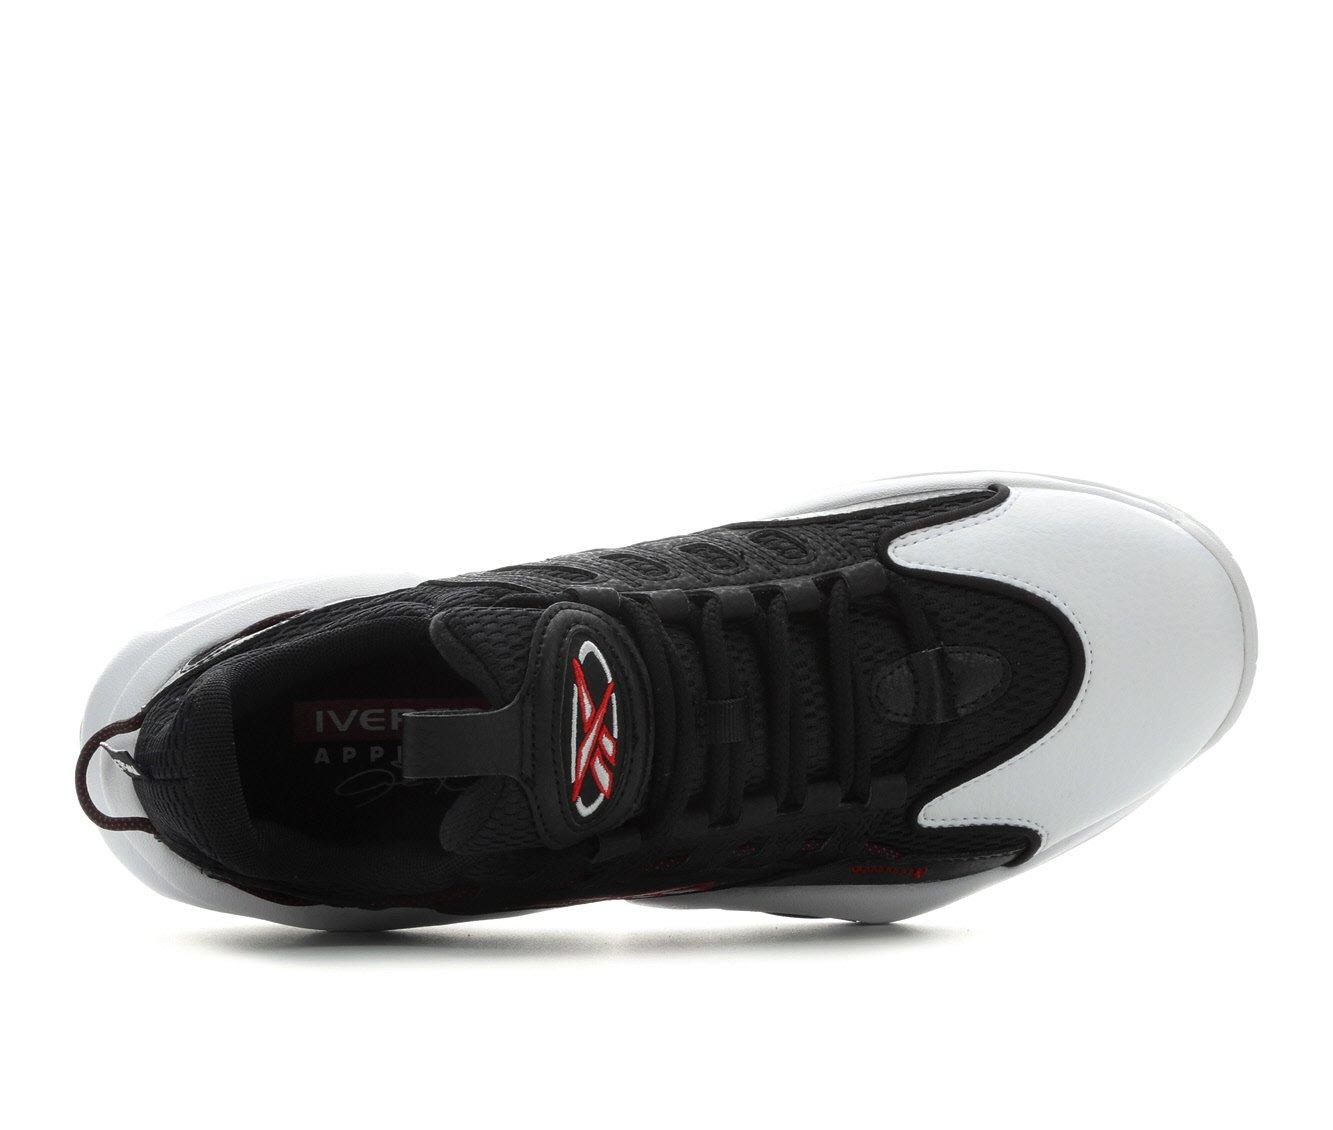 Men's Reebok Solution Mid Basketball Shoes